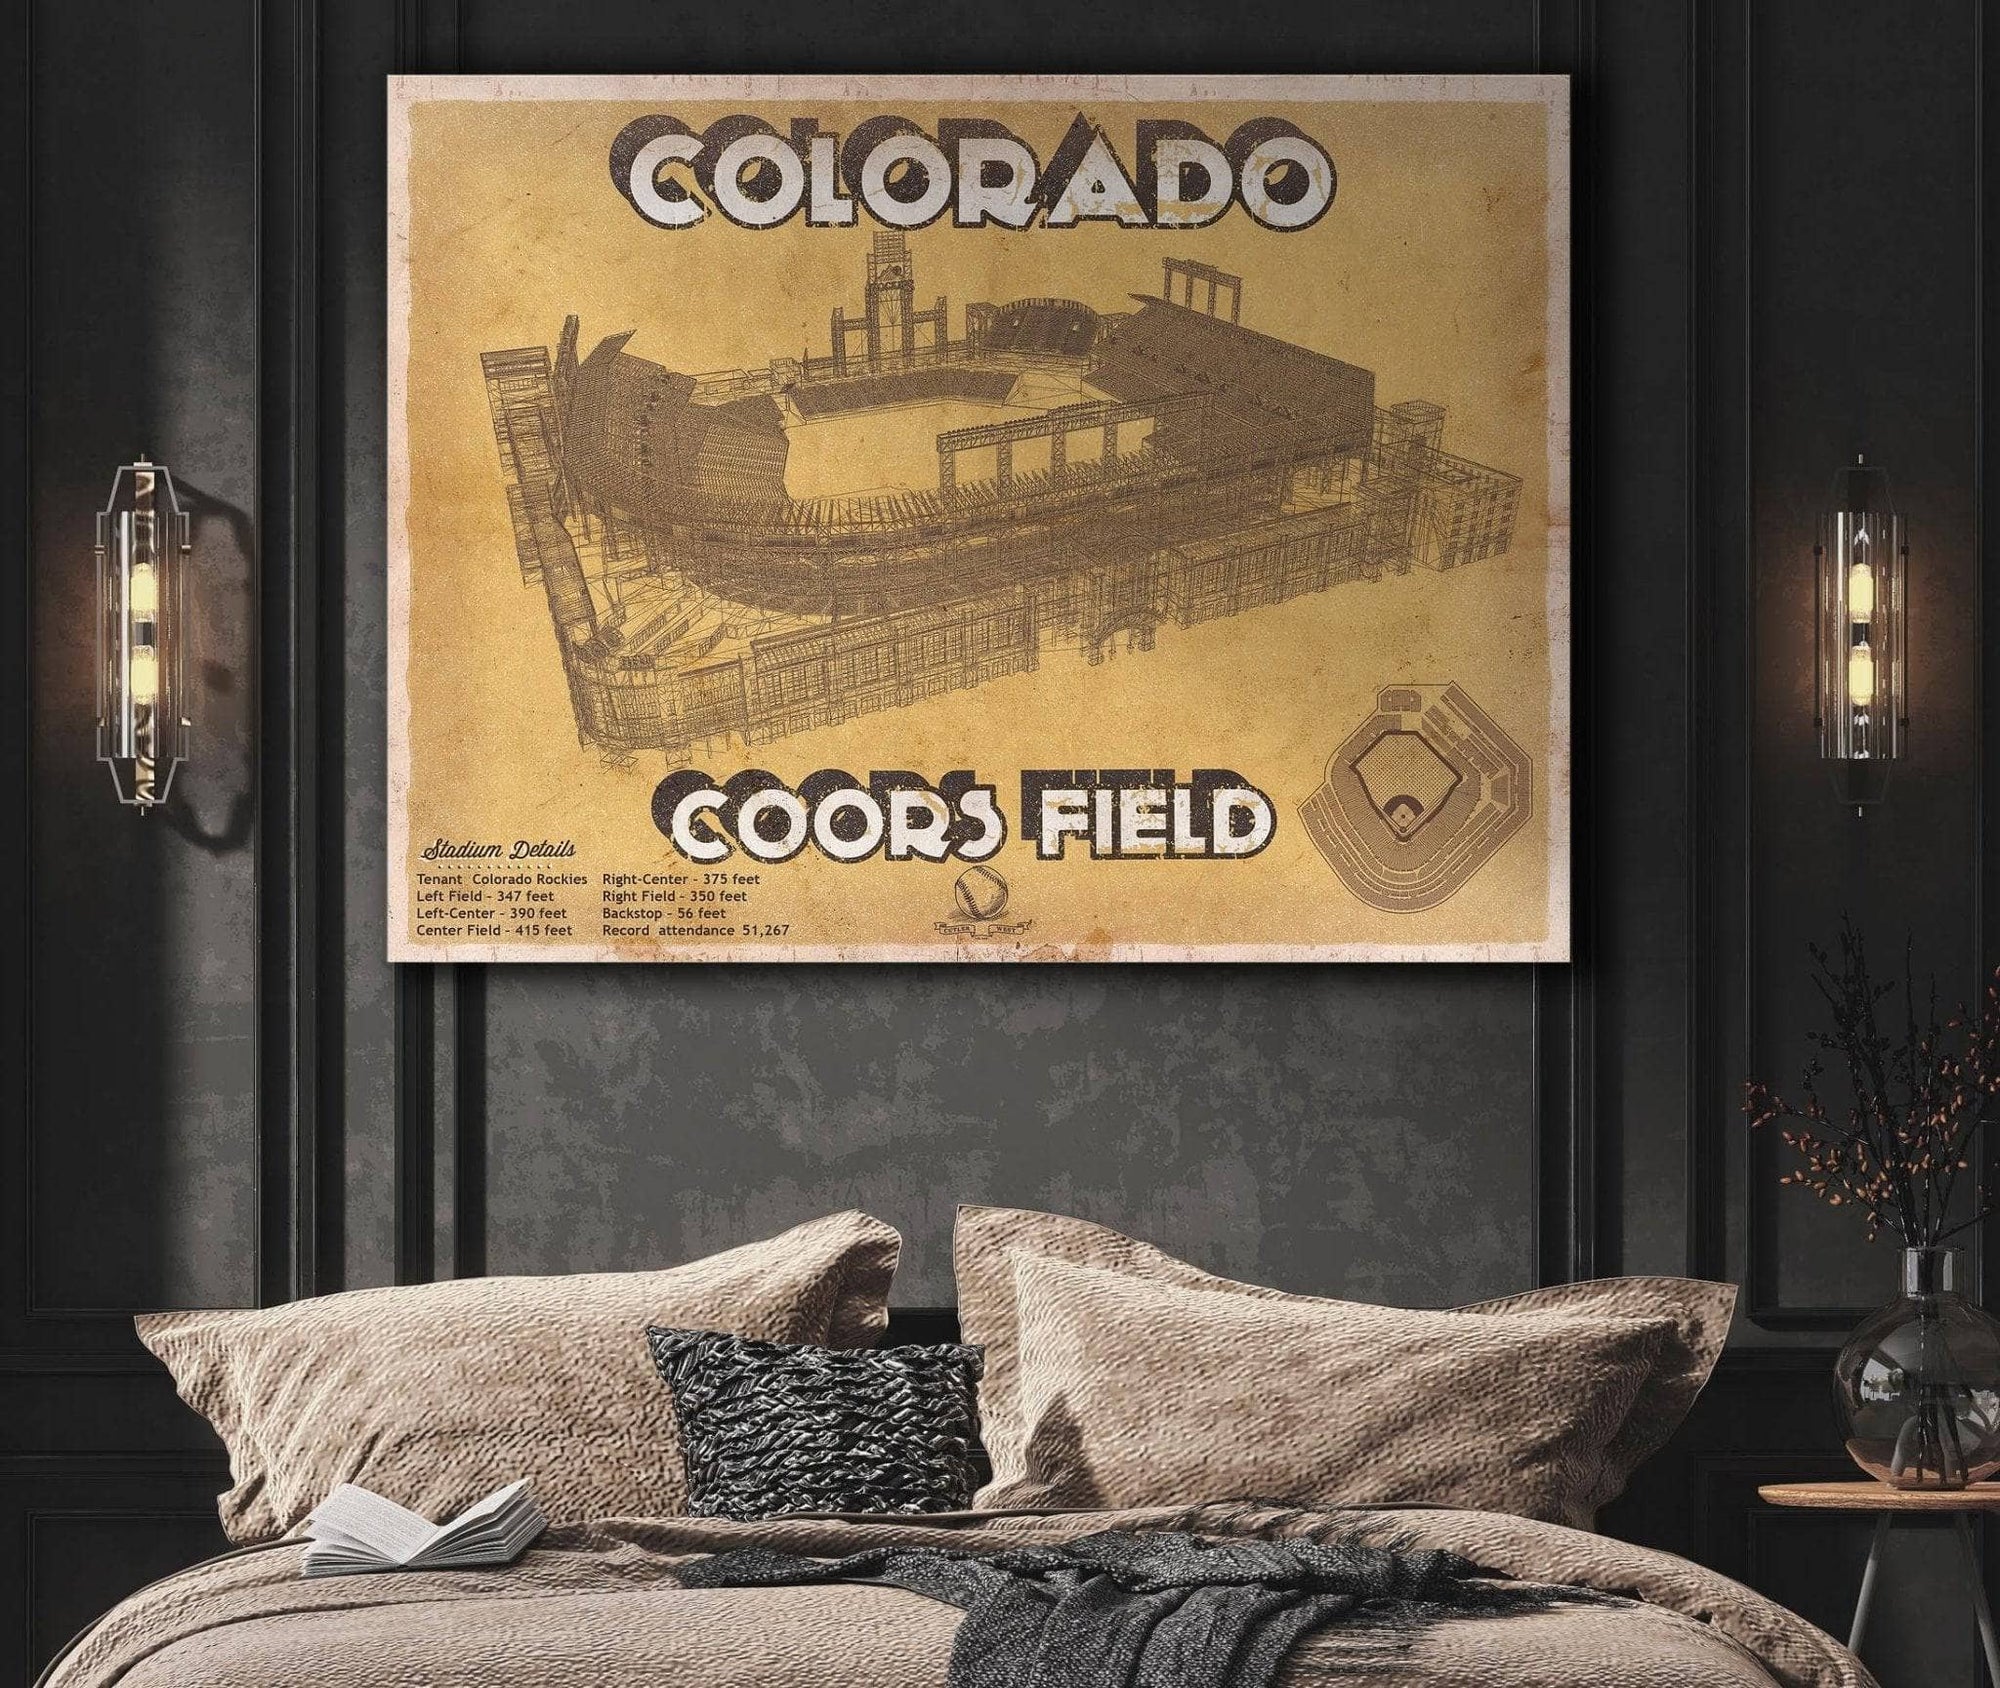 Cutler West Baseball Collection Colorado Rockies Coors Field - Vintage Baseball Fan Print